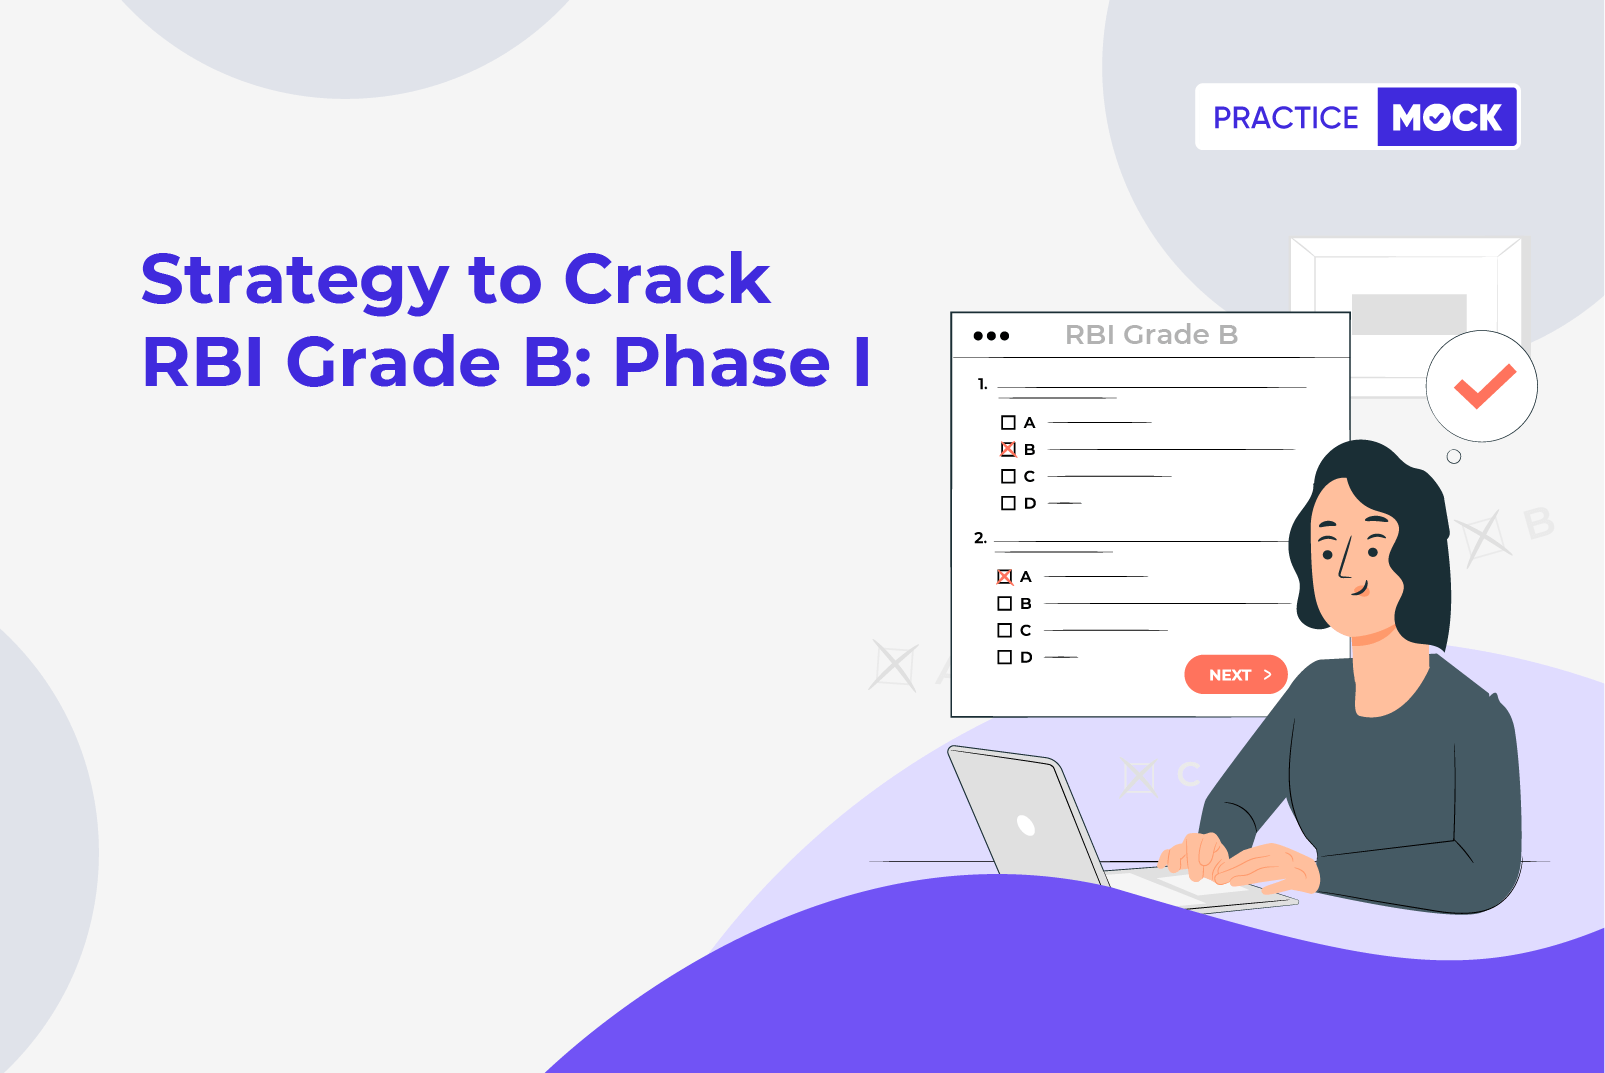 Strategy to crack RBI Grade B Phase I